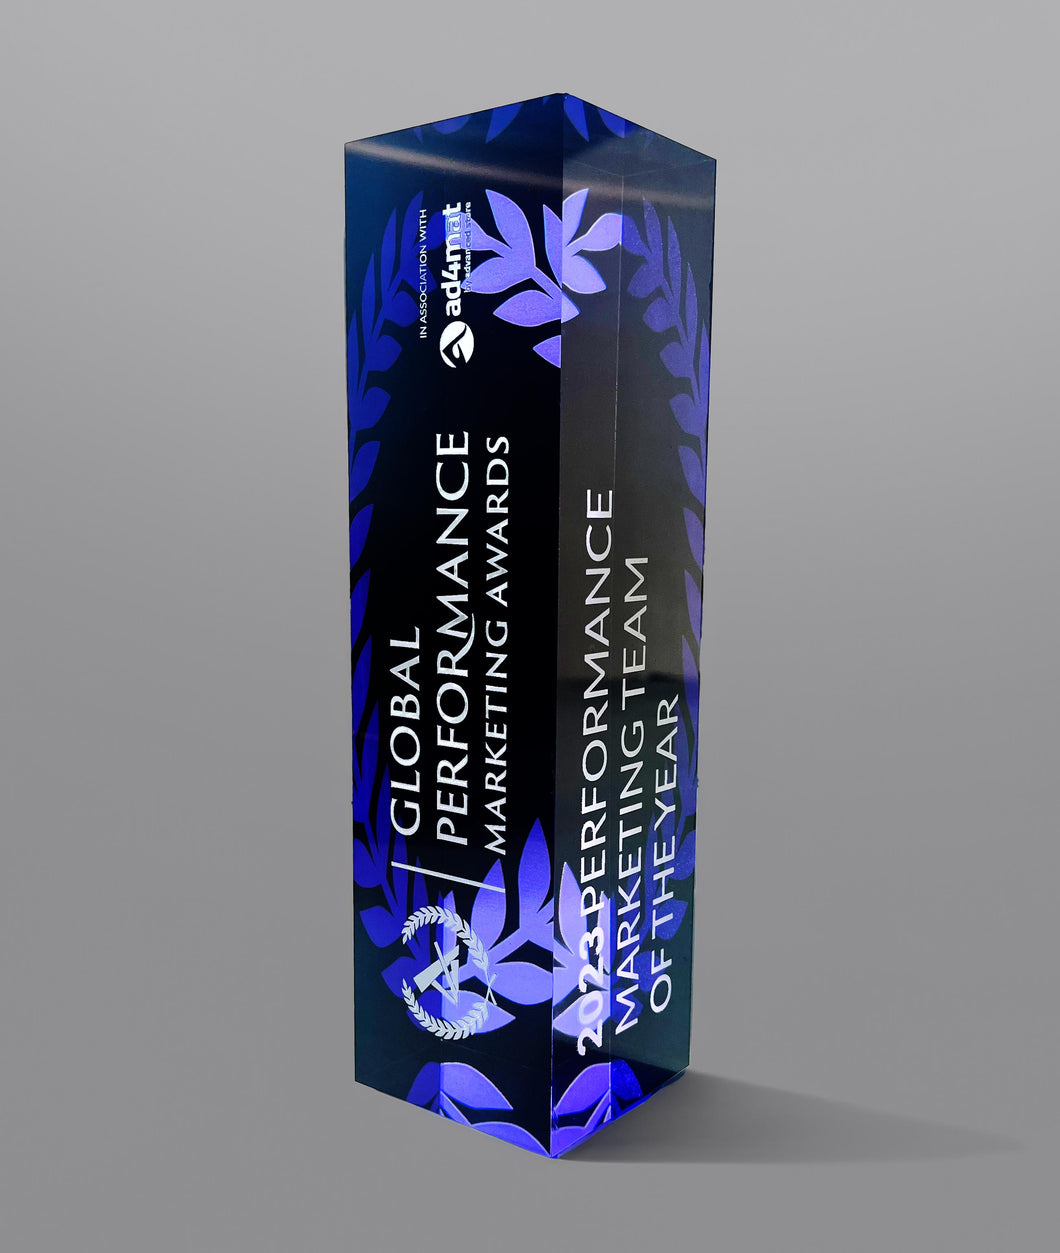 Global Performance Marketing Award 23 - Winner #GPMA23